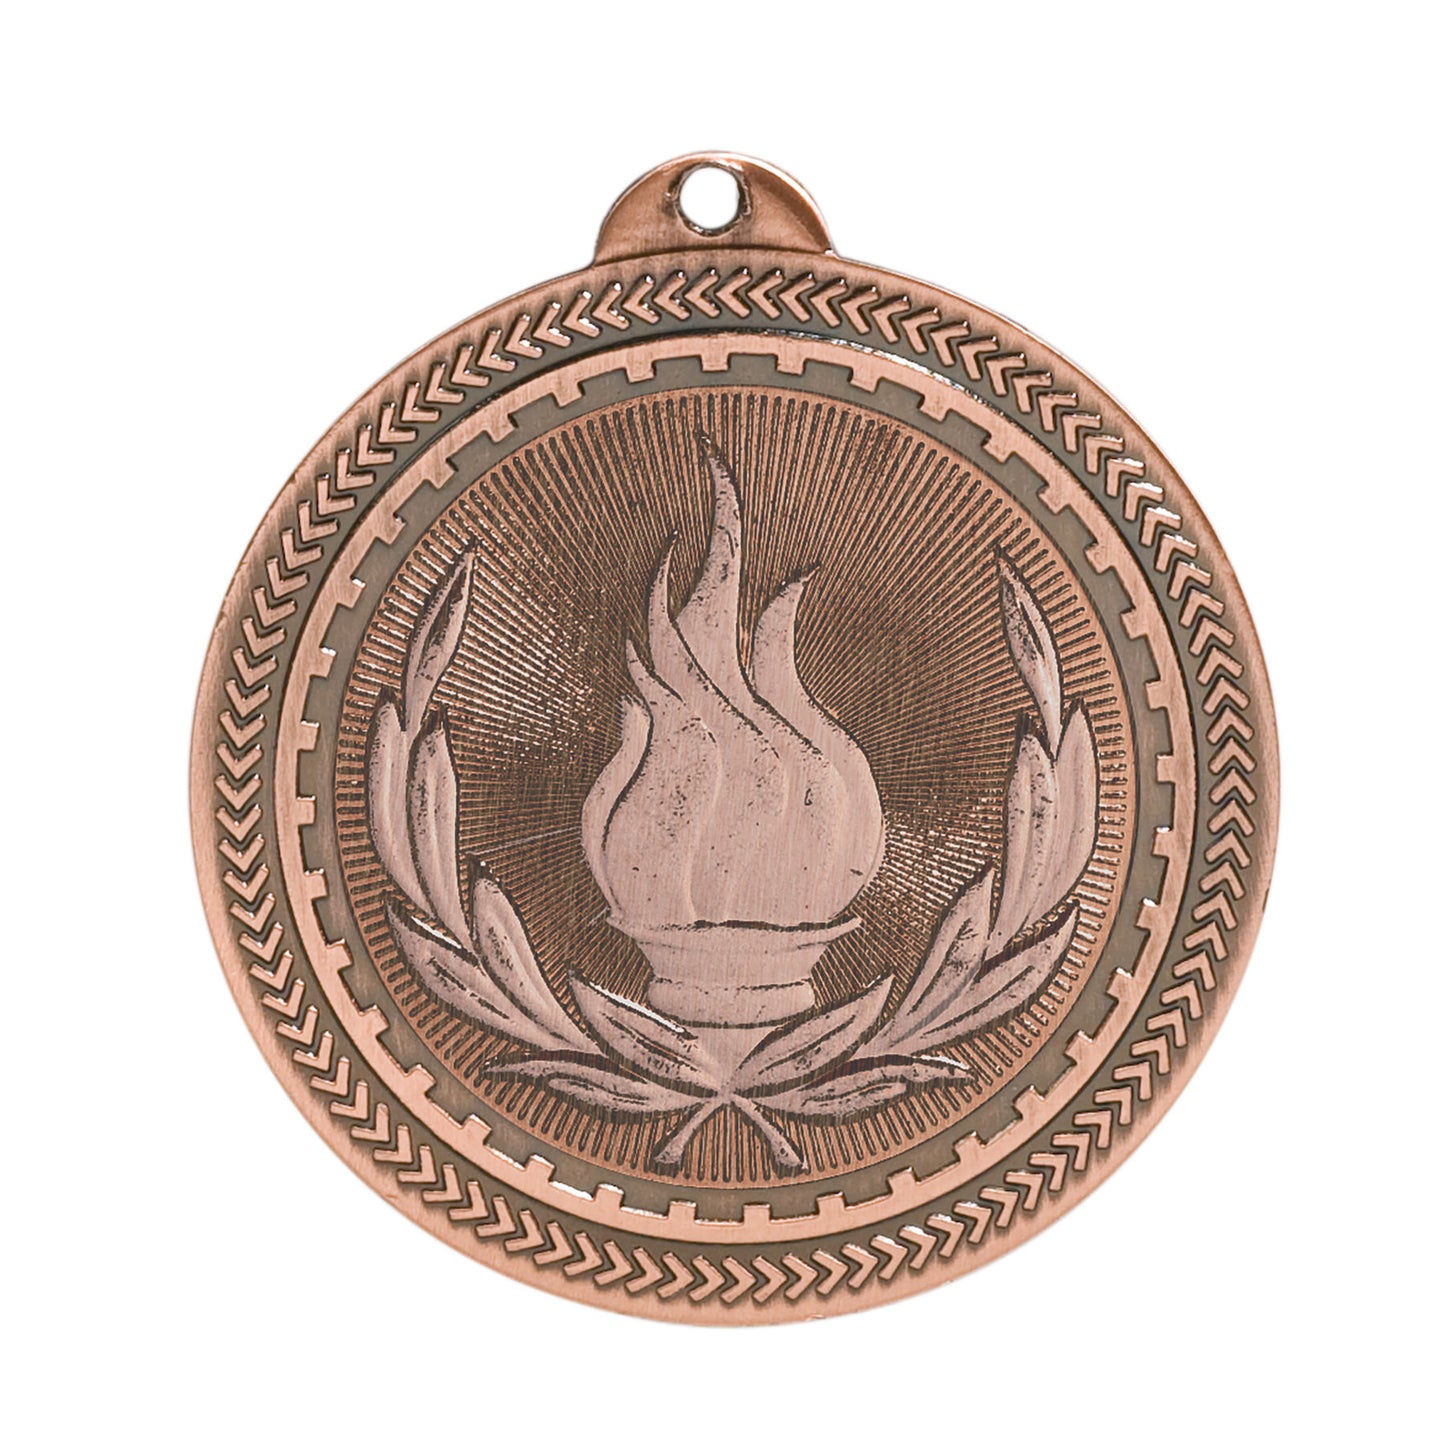 2" Victory Laserable BriteLazer Medal